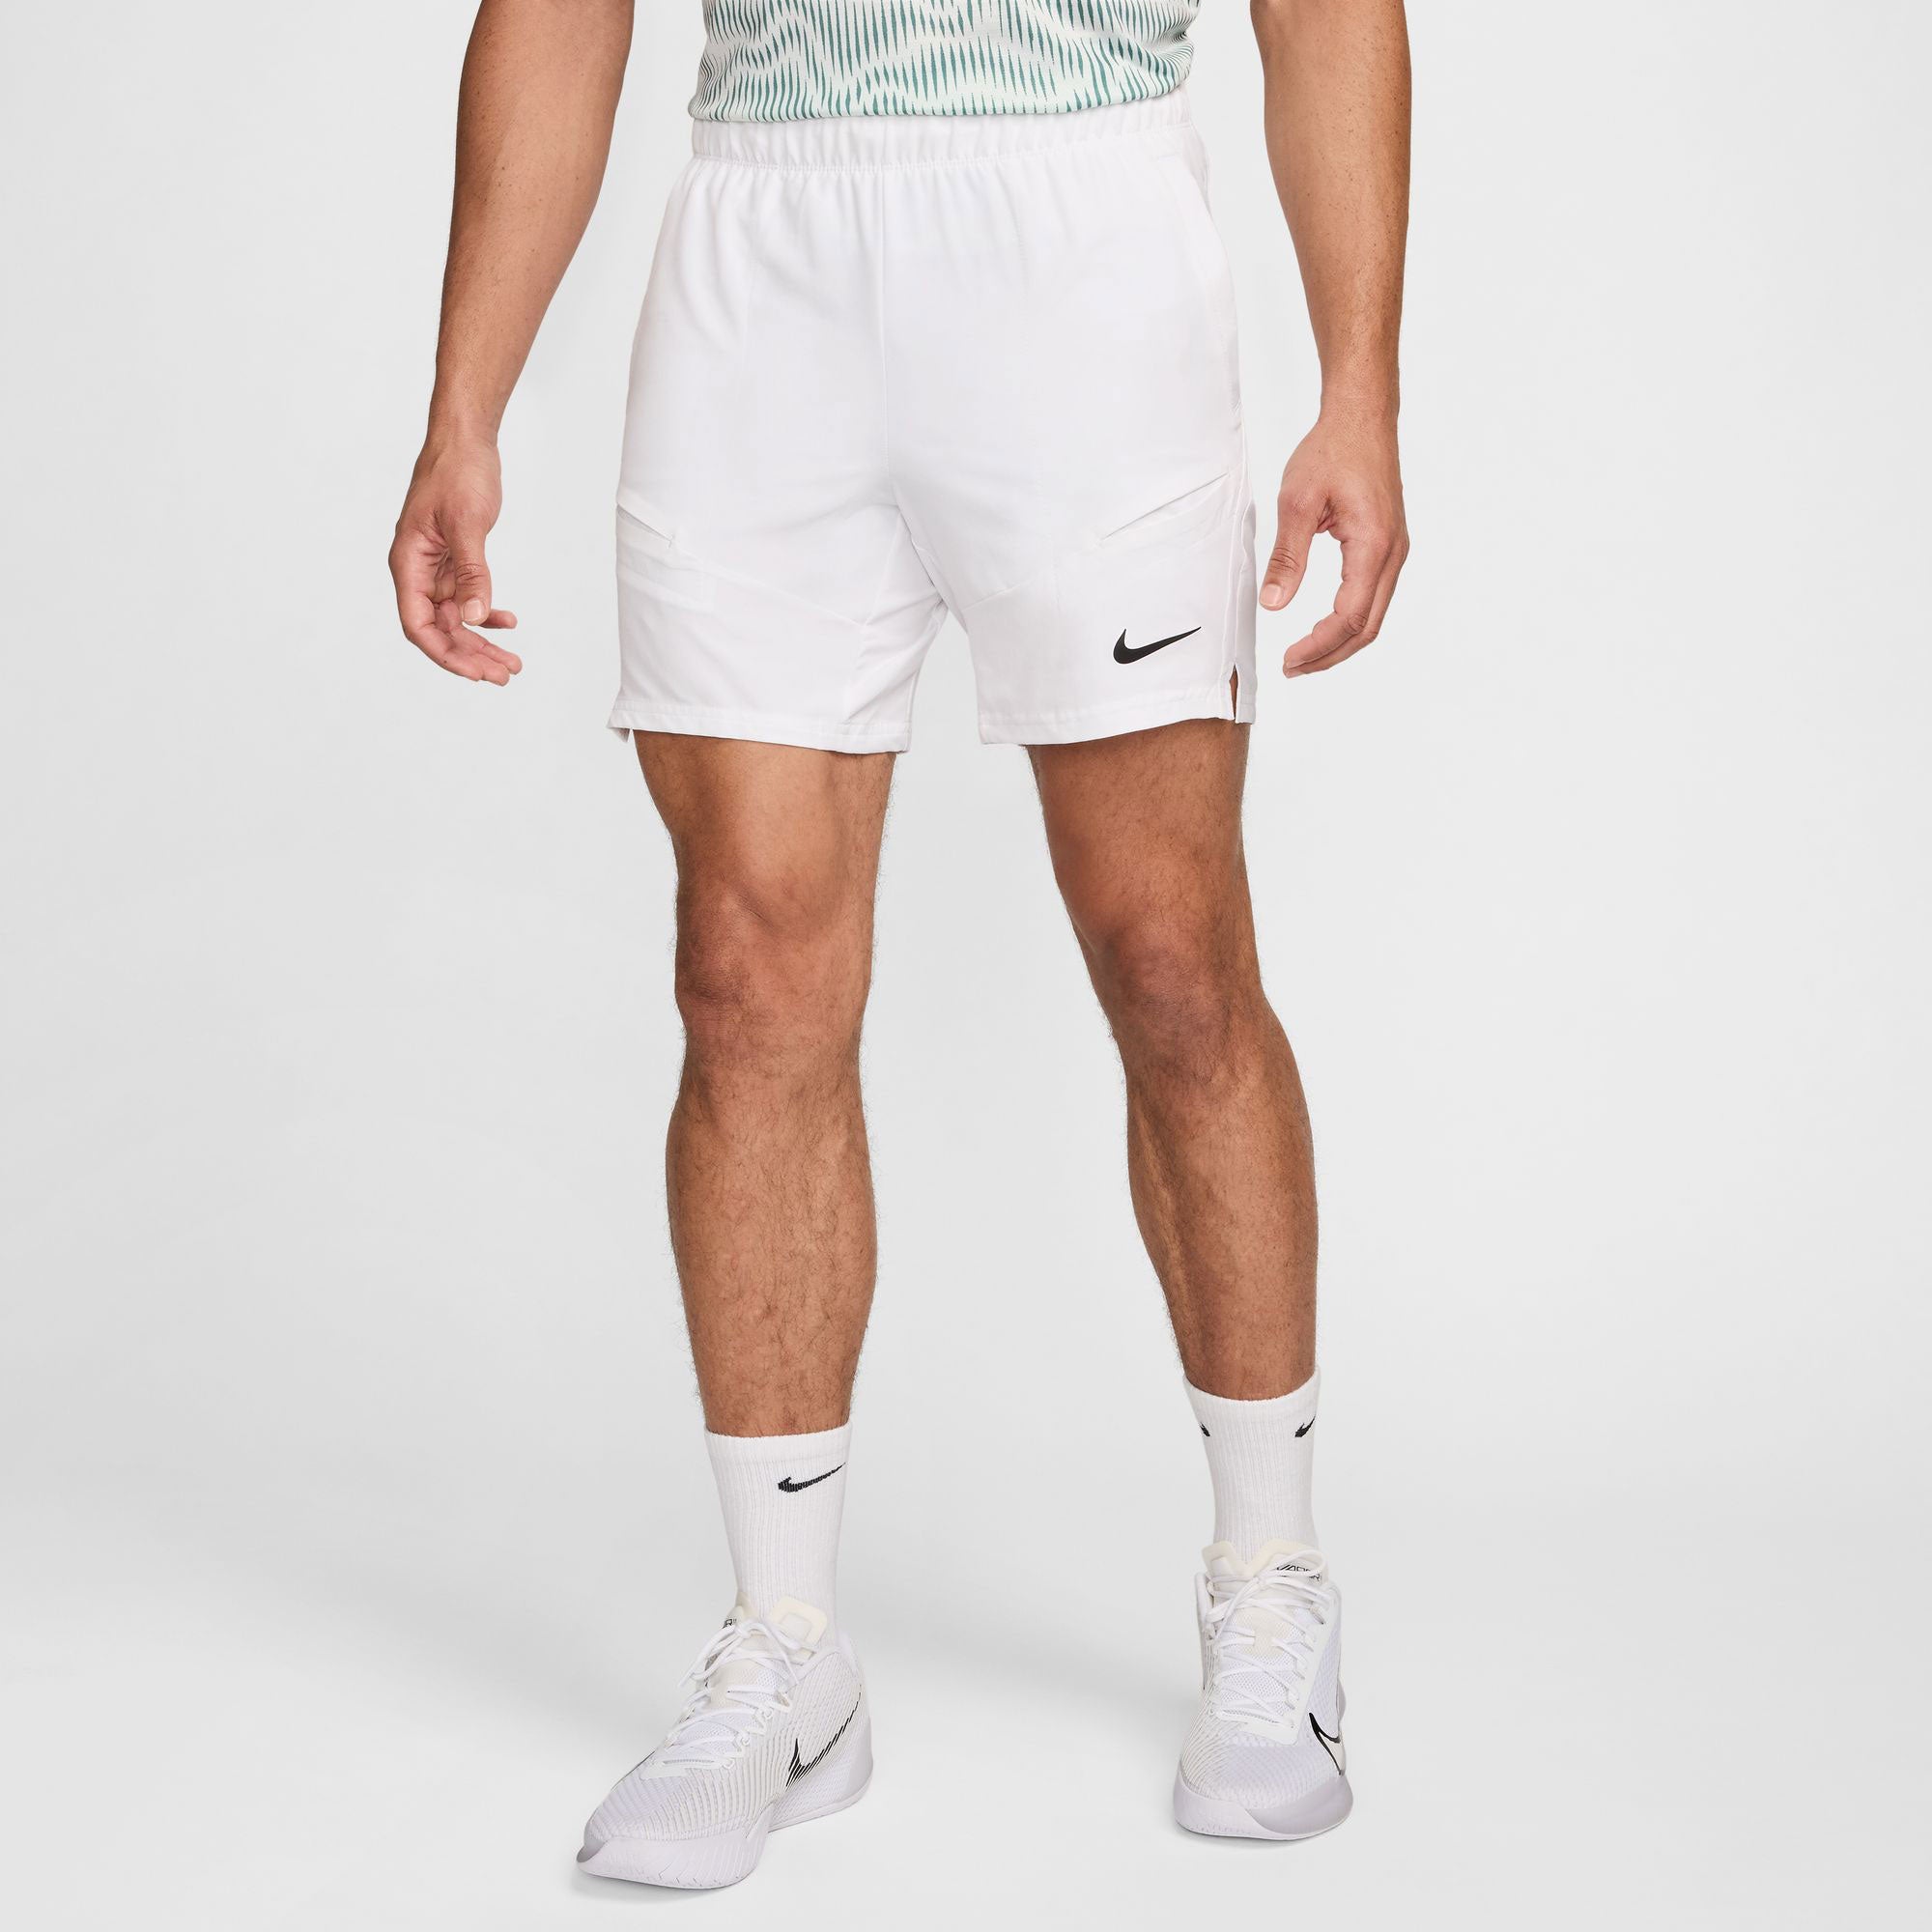 NikeCourt Advantage London Men's Dri-FIT 7-Inch Tennis Shorts - White (1)